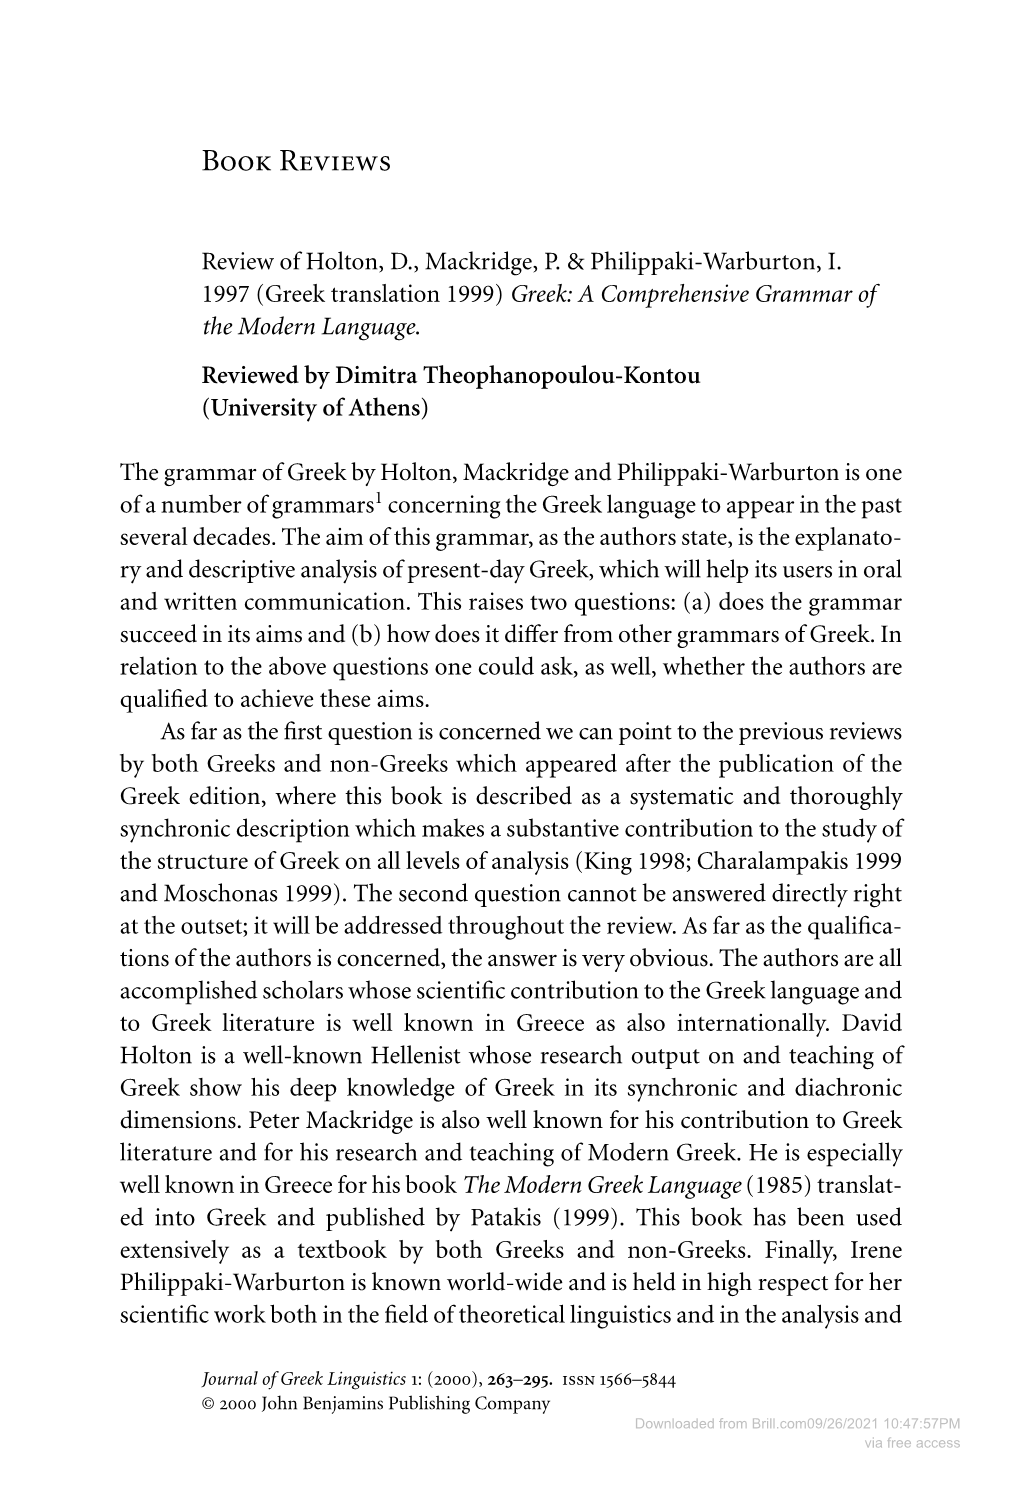 Review of "Greek: a Comprehensive Grammar of the Modern Language" by Holton, D., Mackridge, P. & Philippaki-Warbur